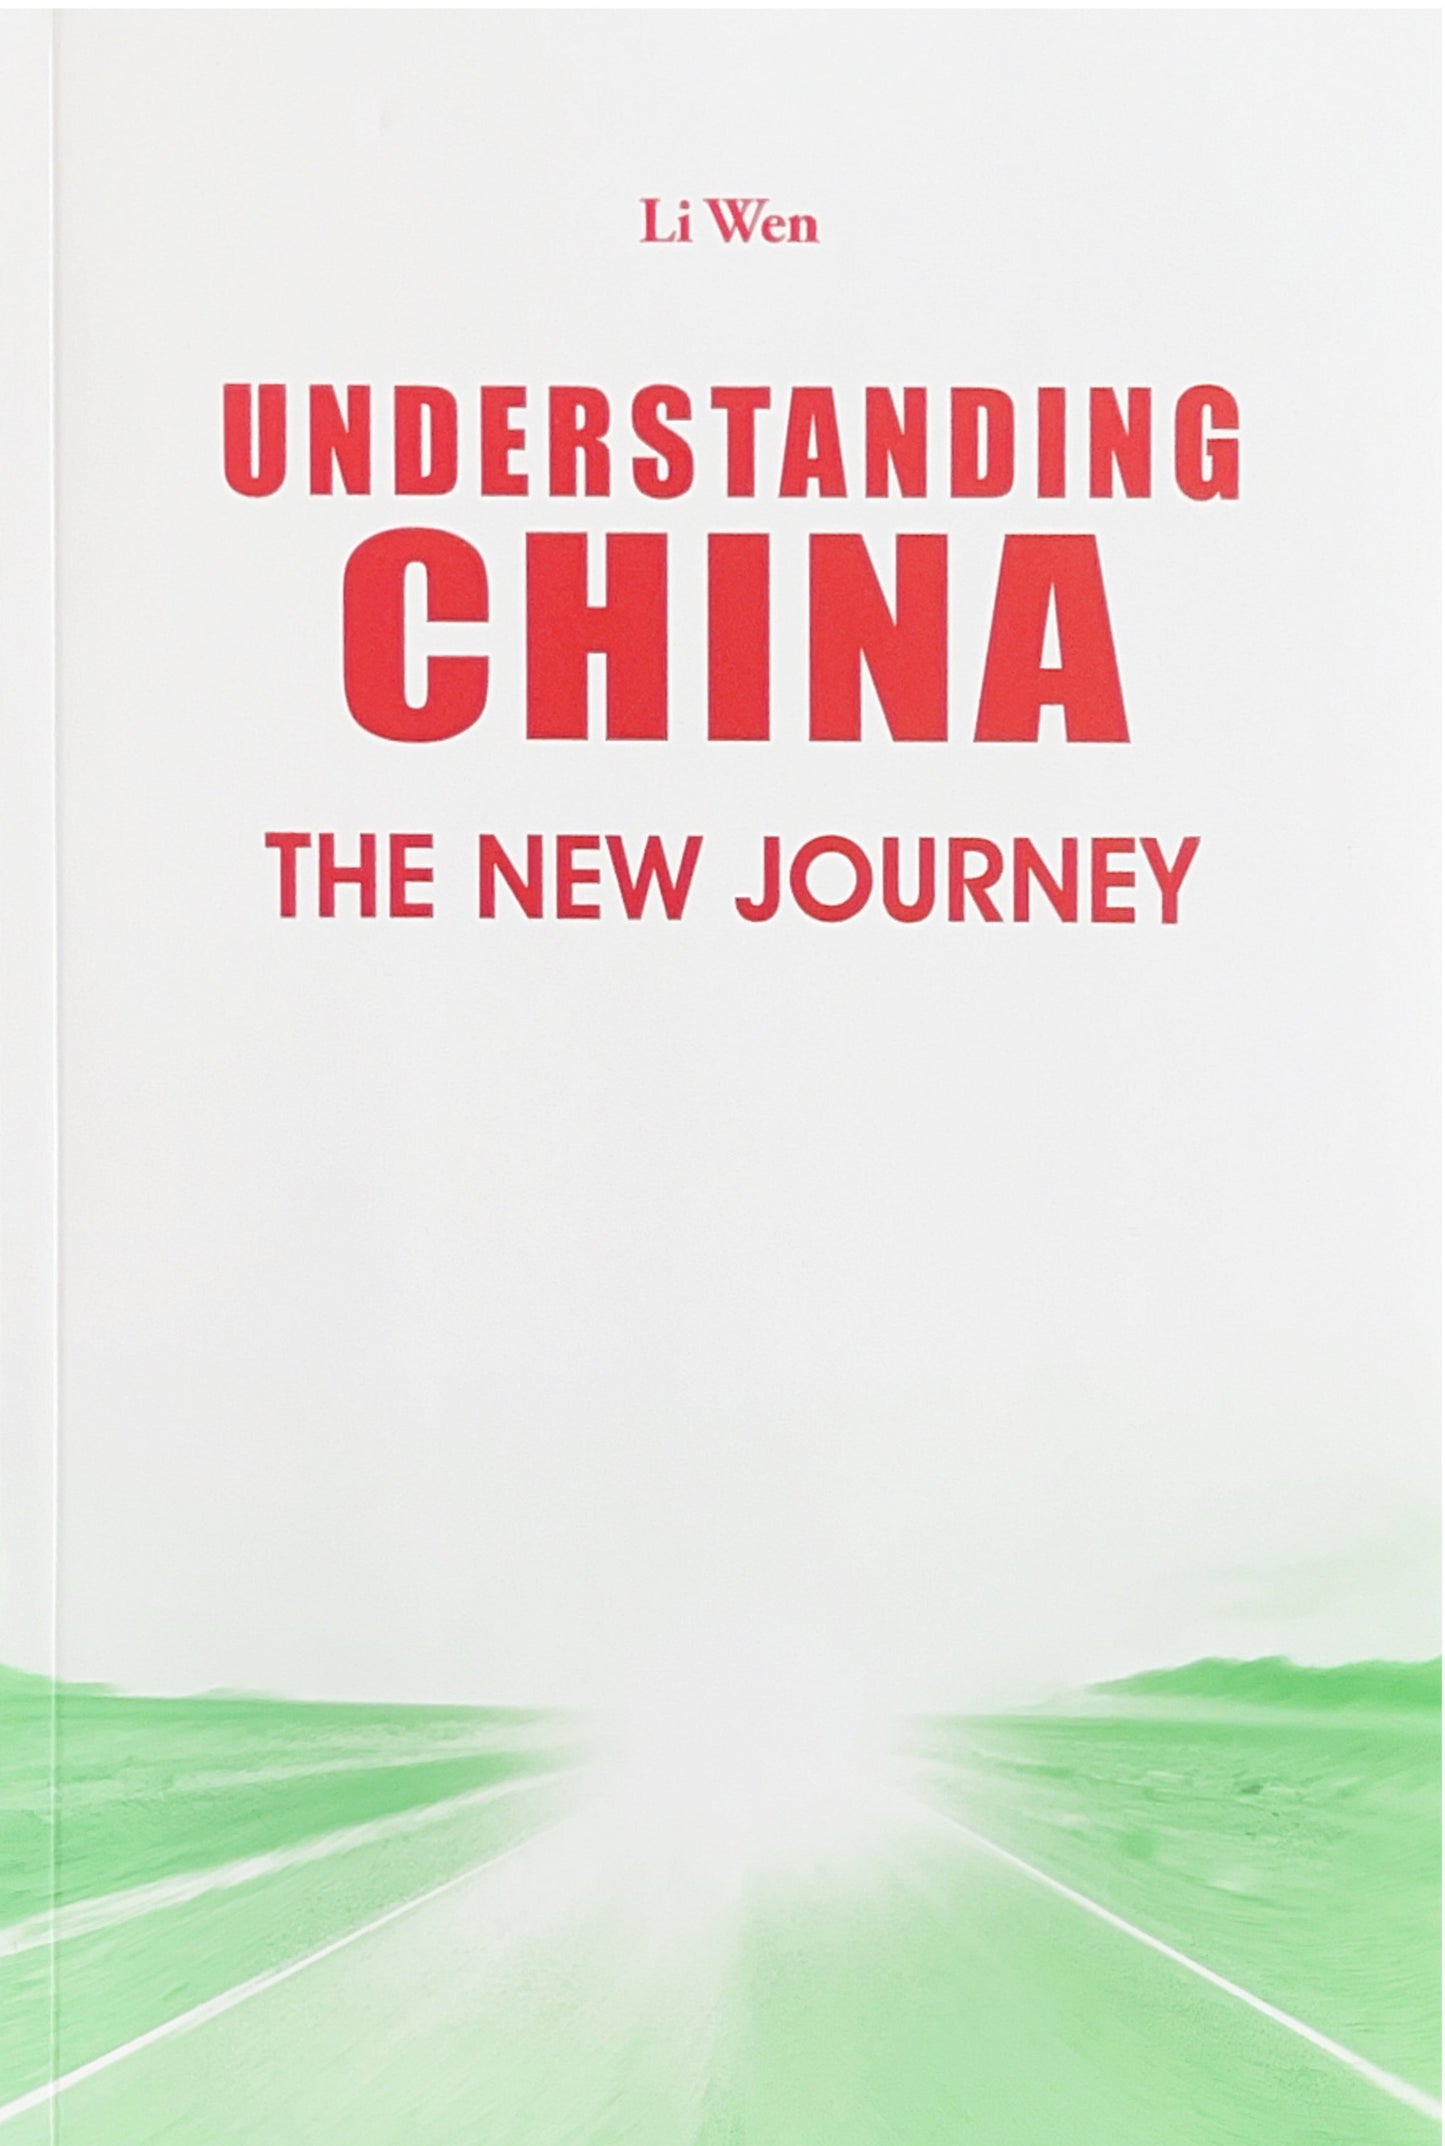 Understanding China: The New Journey